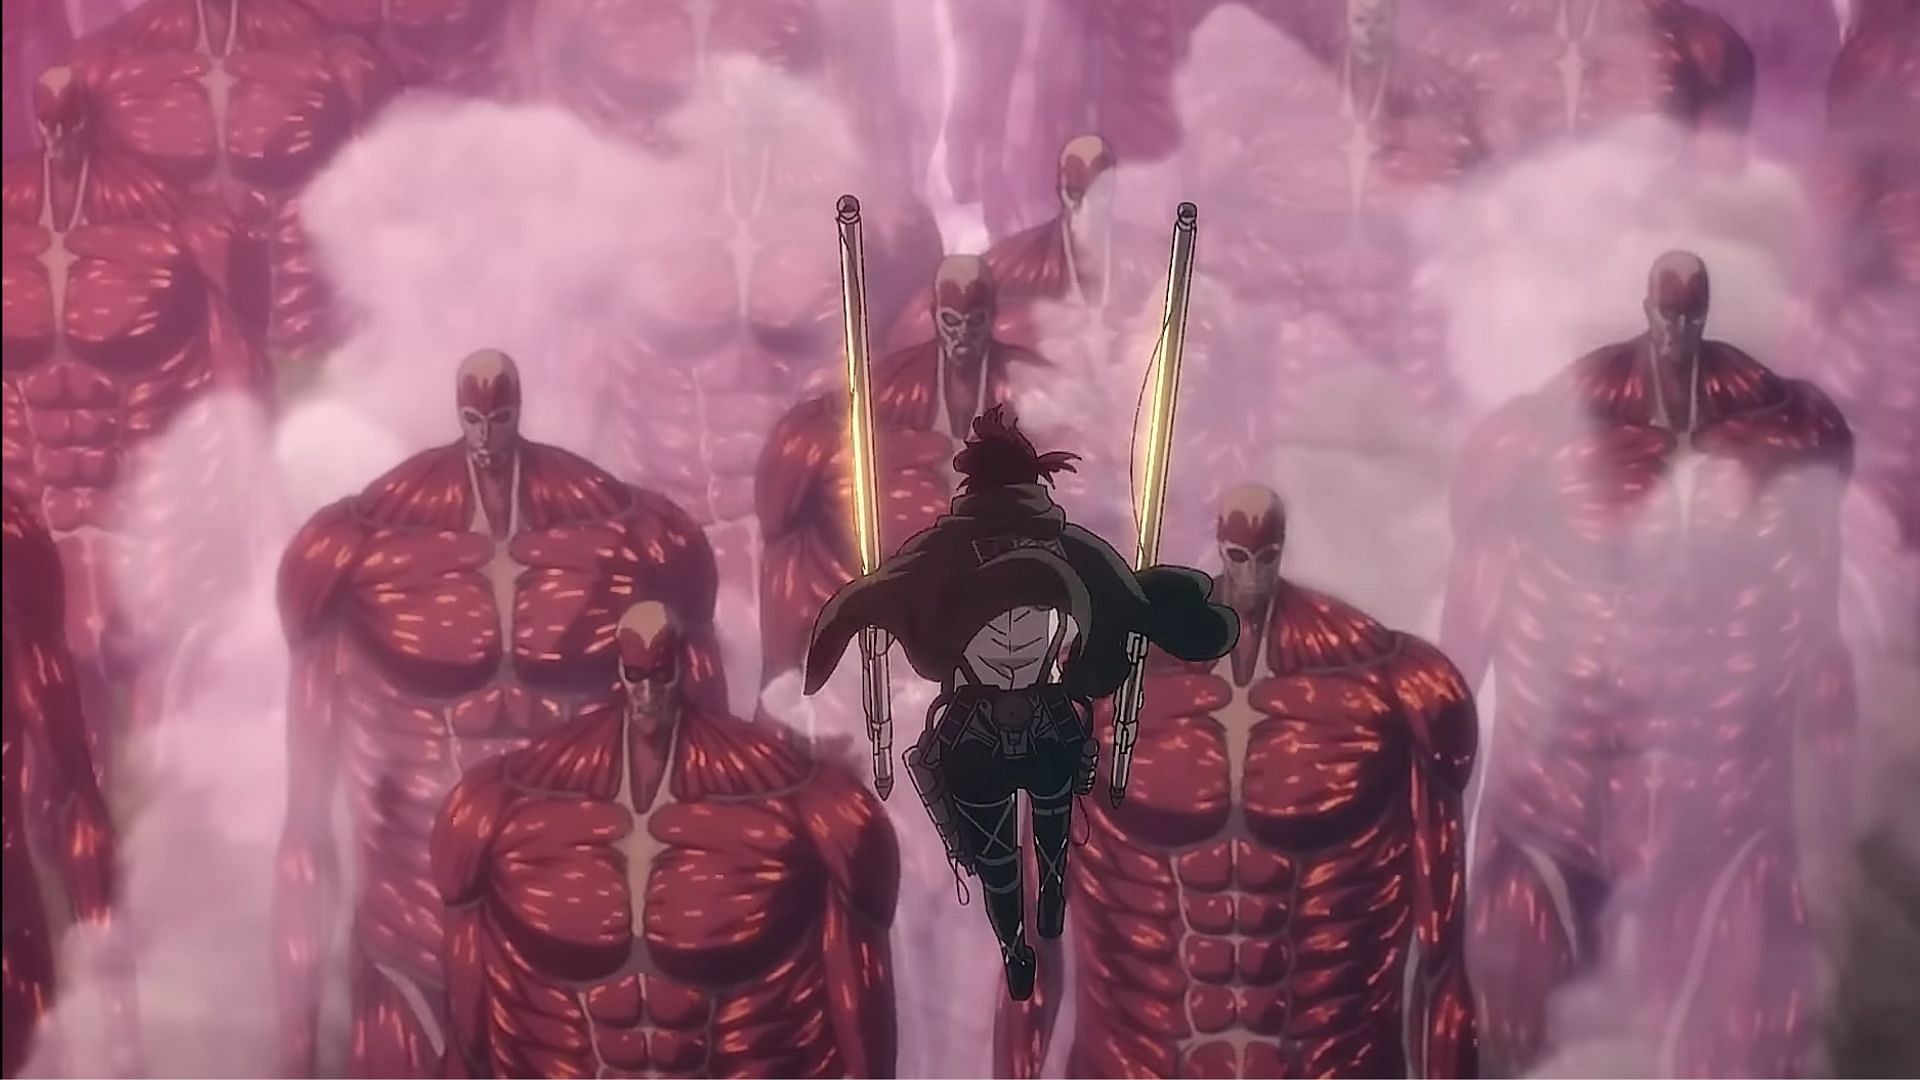 Attack on Titan manga vs anime ending controversy, explained